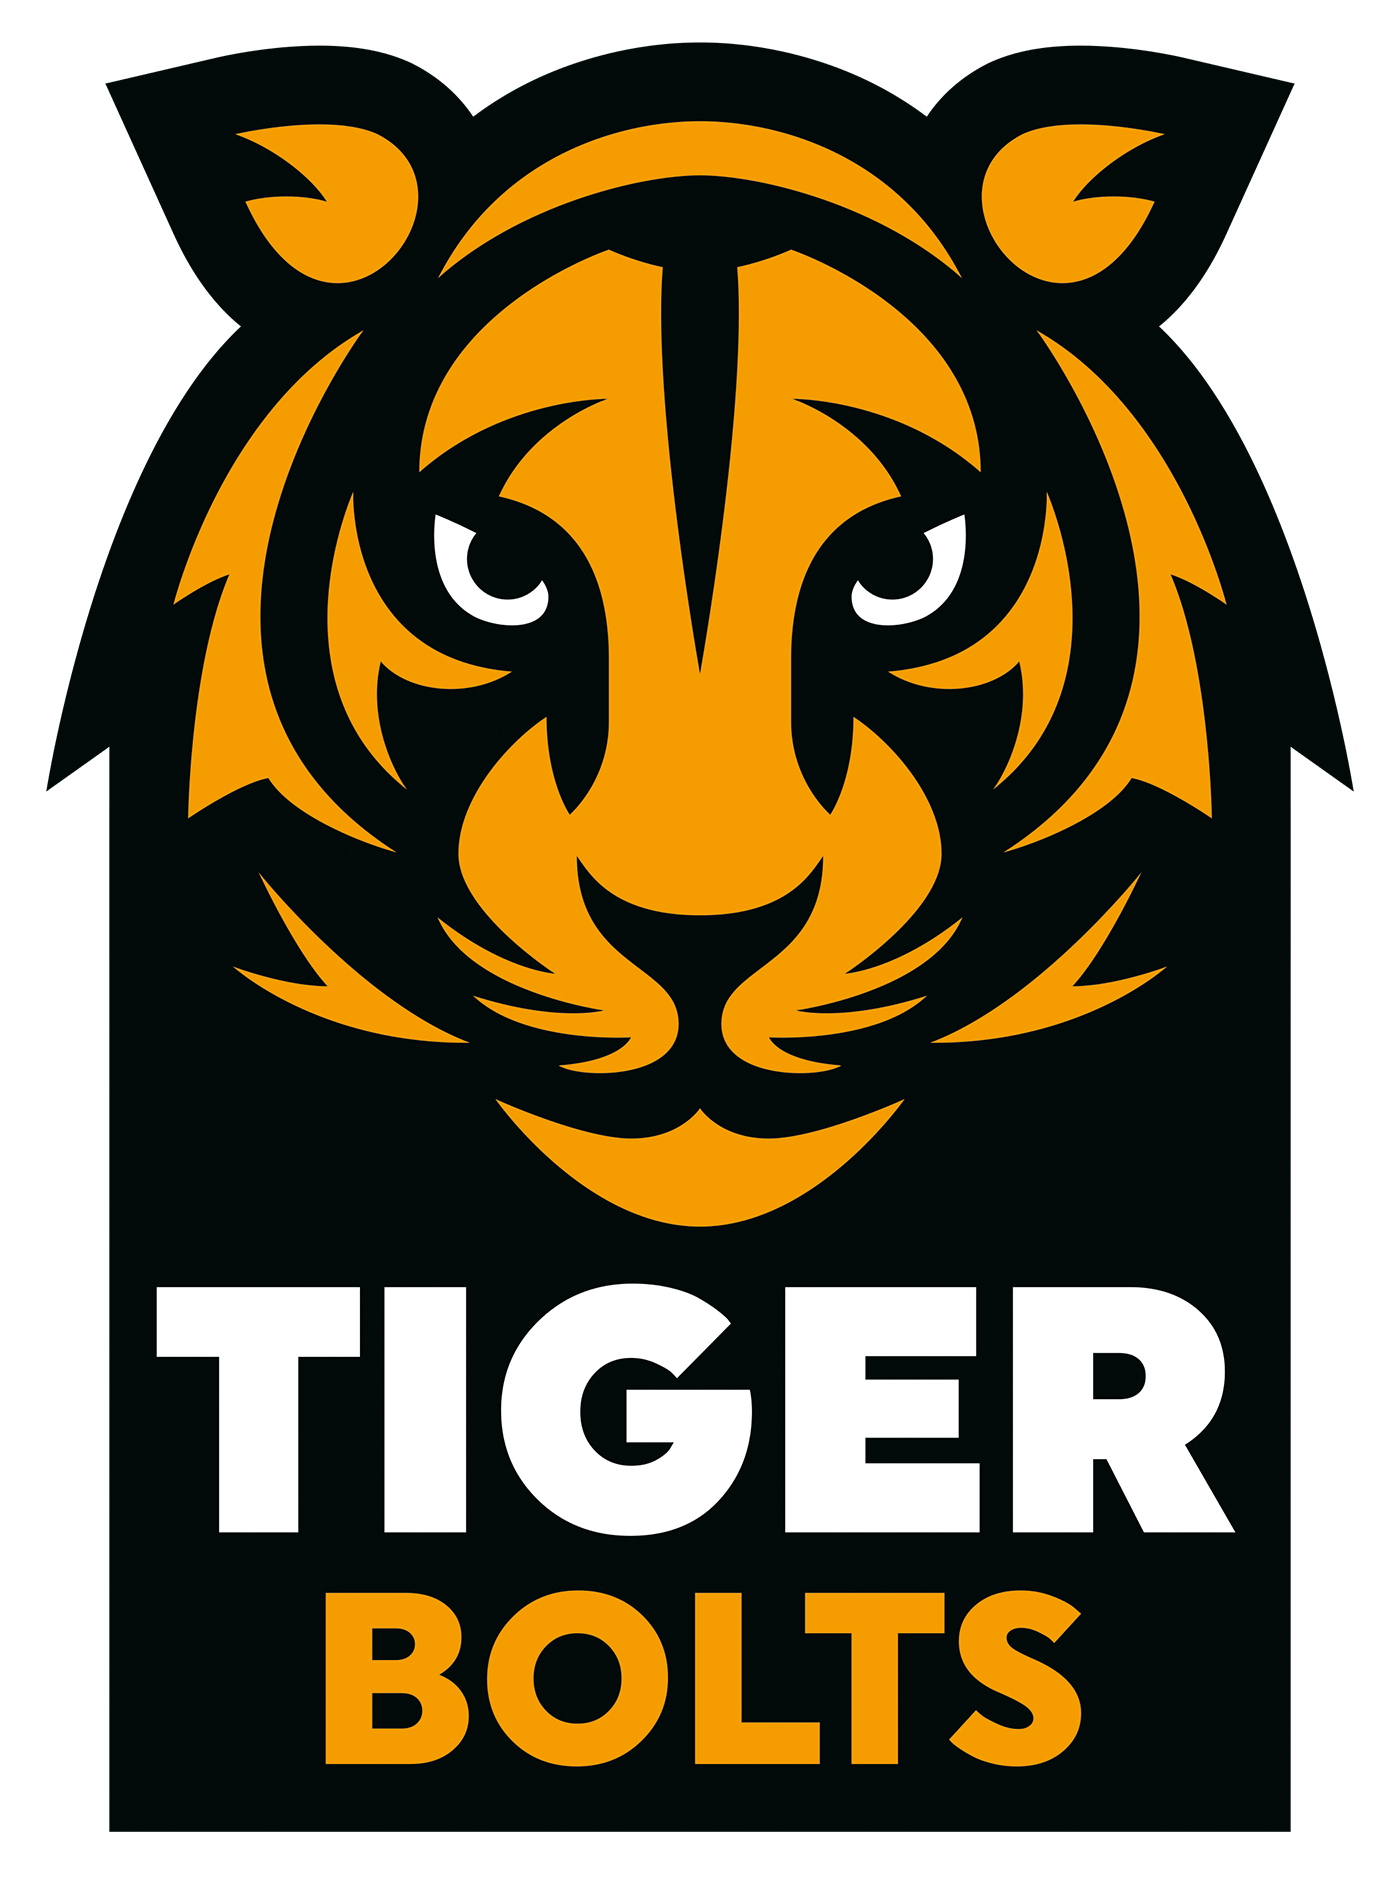 TIGER Ties Logo